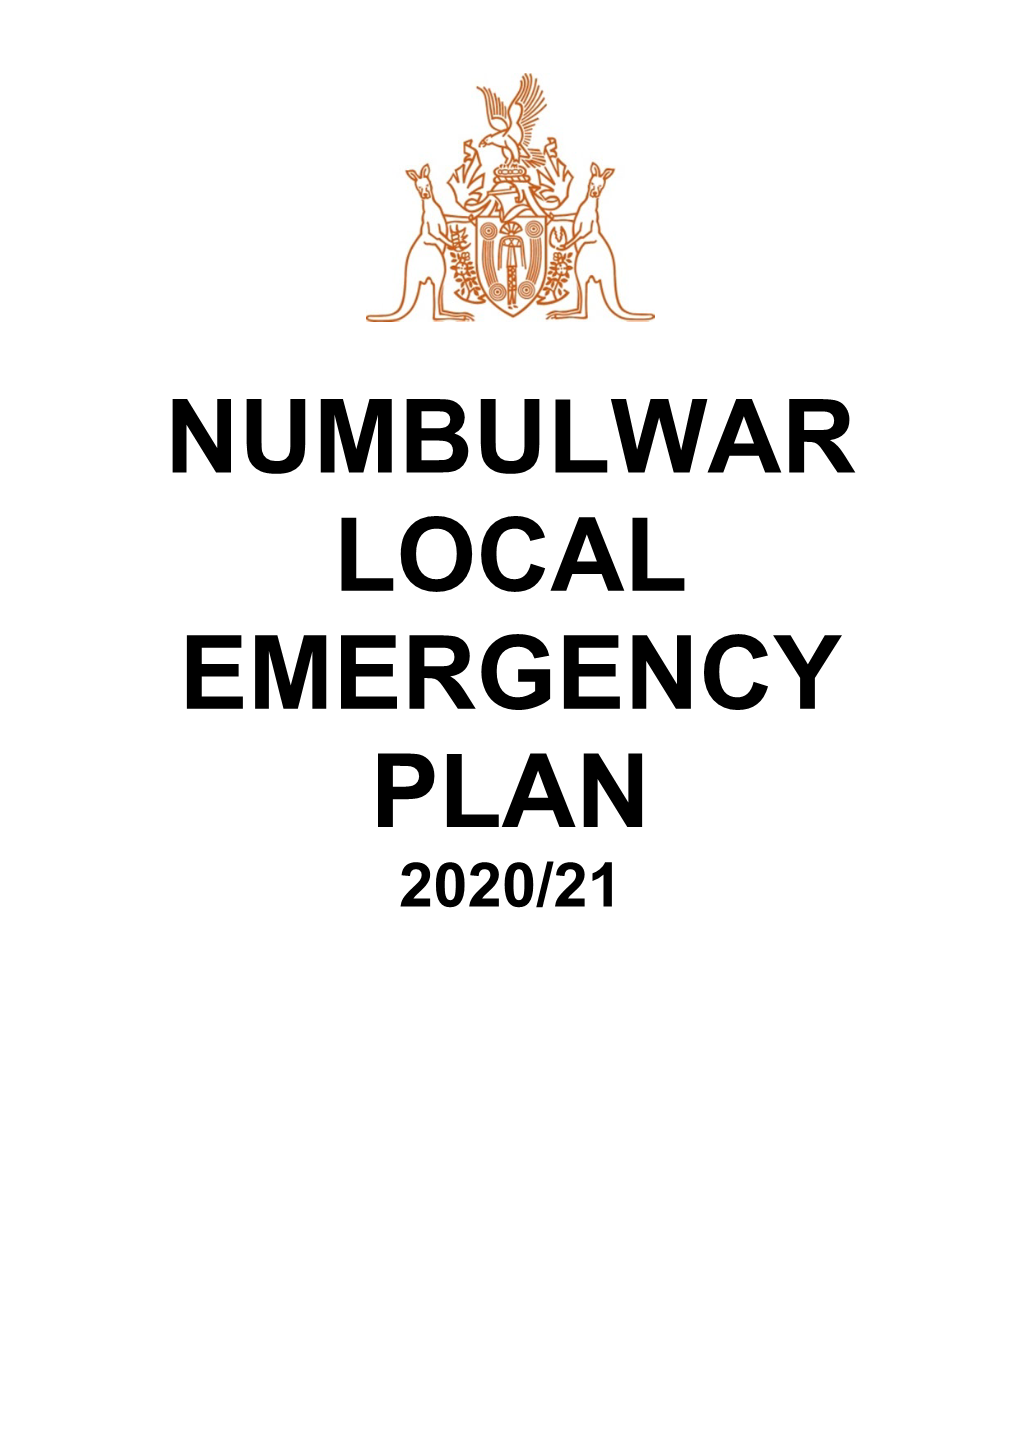 Numbulwar Local Emergency Plan 2020/21